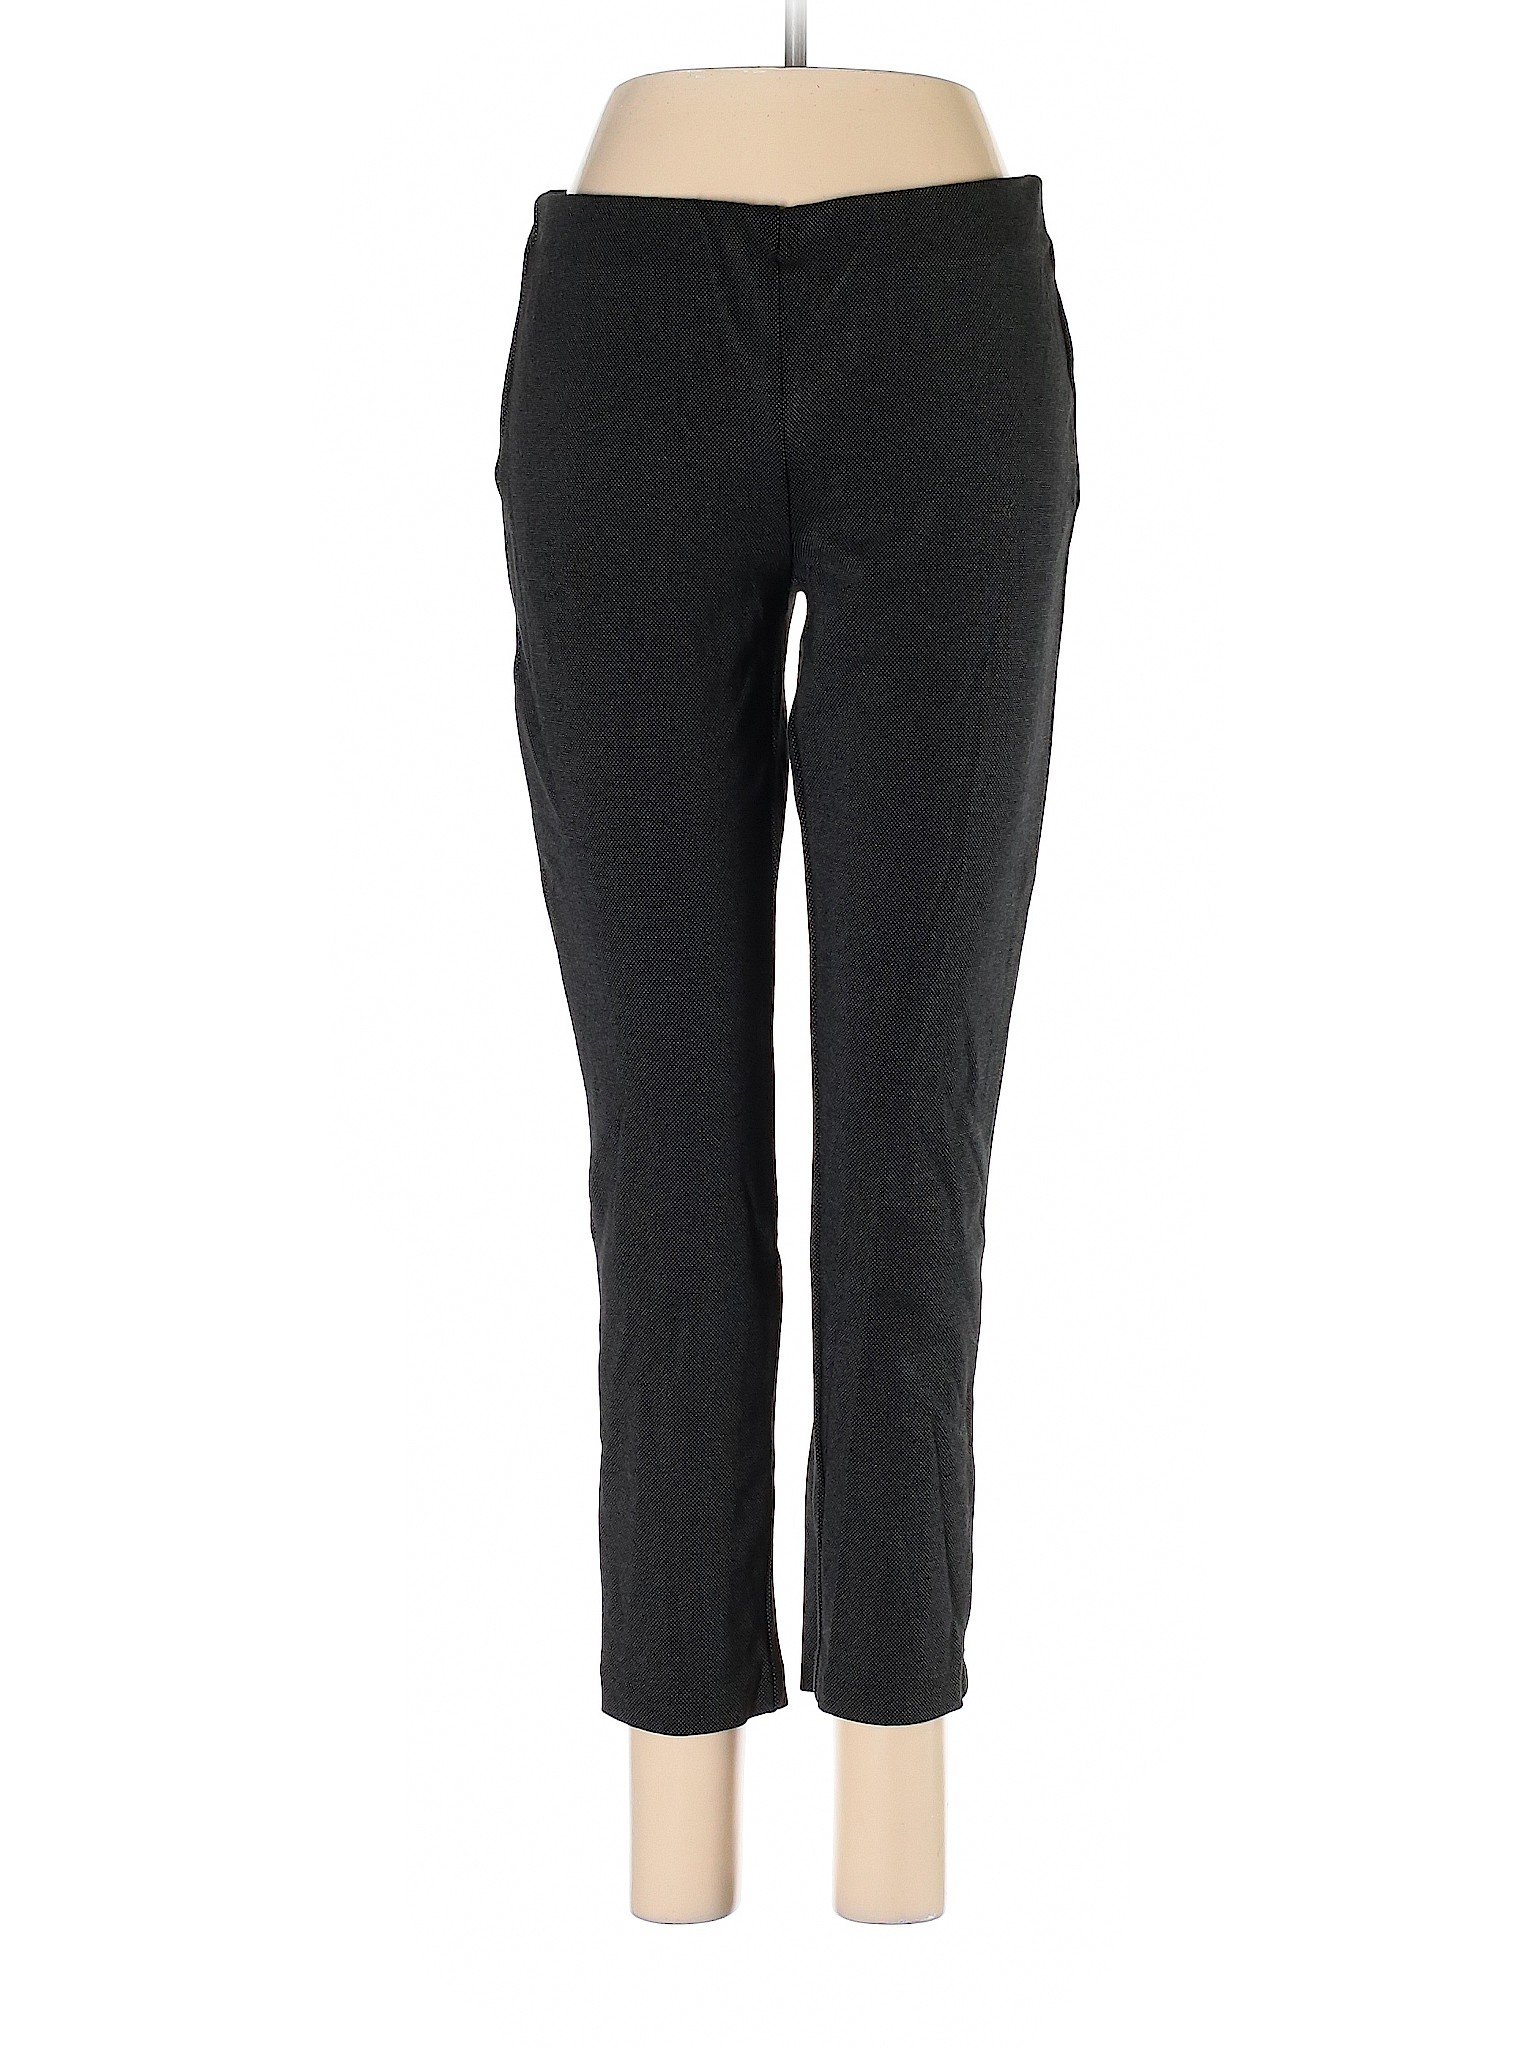 Adrienne Vittadini Women Black Casual Pants M | eBay